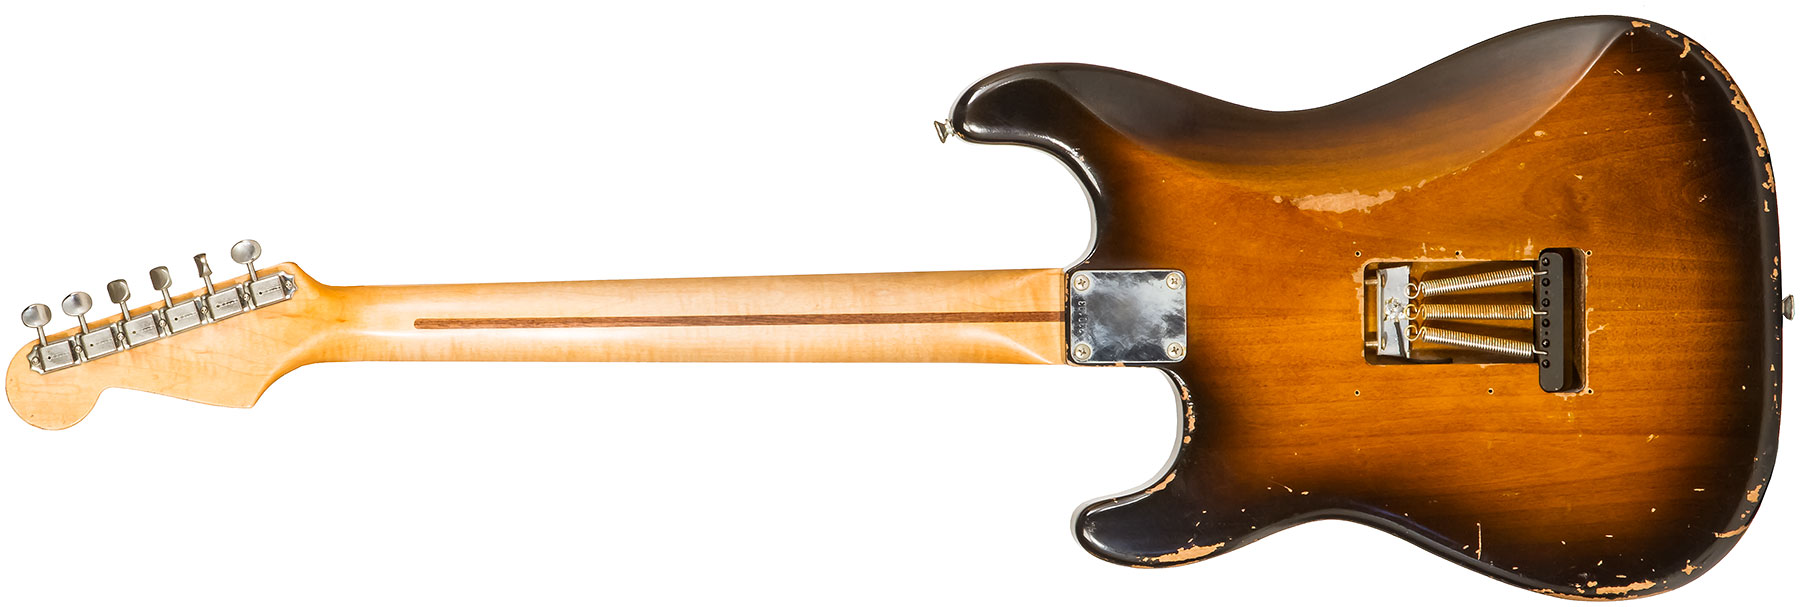 Rebelrelic S-series 54 3s Trem Mn #230103 - Medium Aged 2-tone Sunburst - Str shape electric guitar - Variation 1